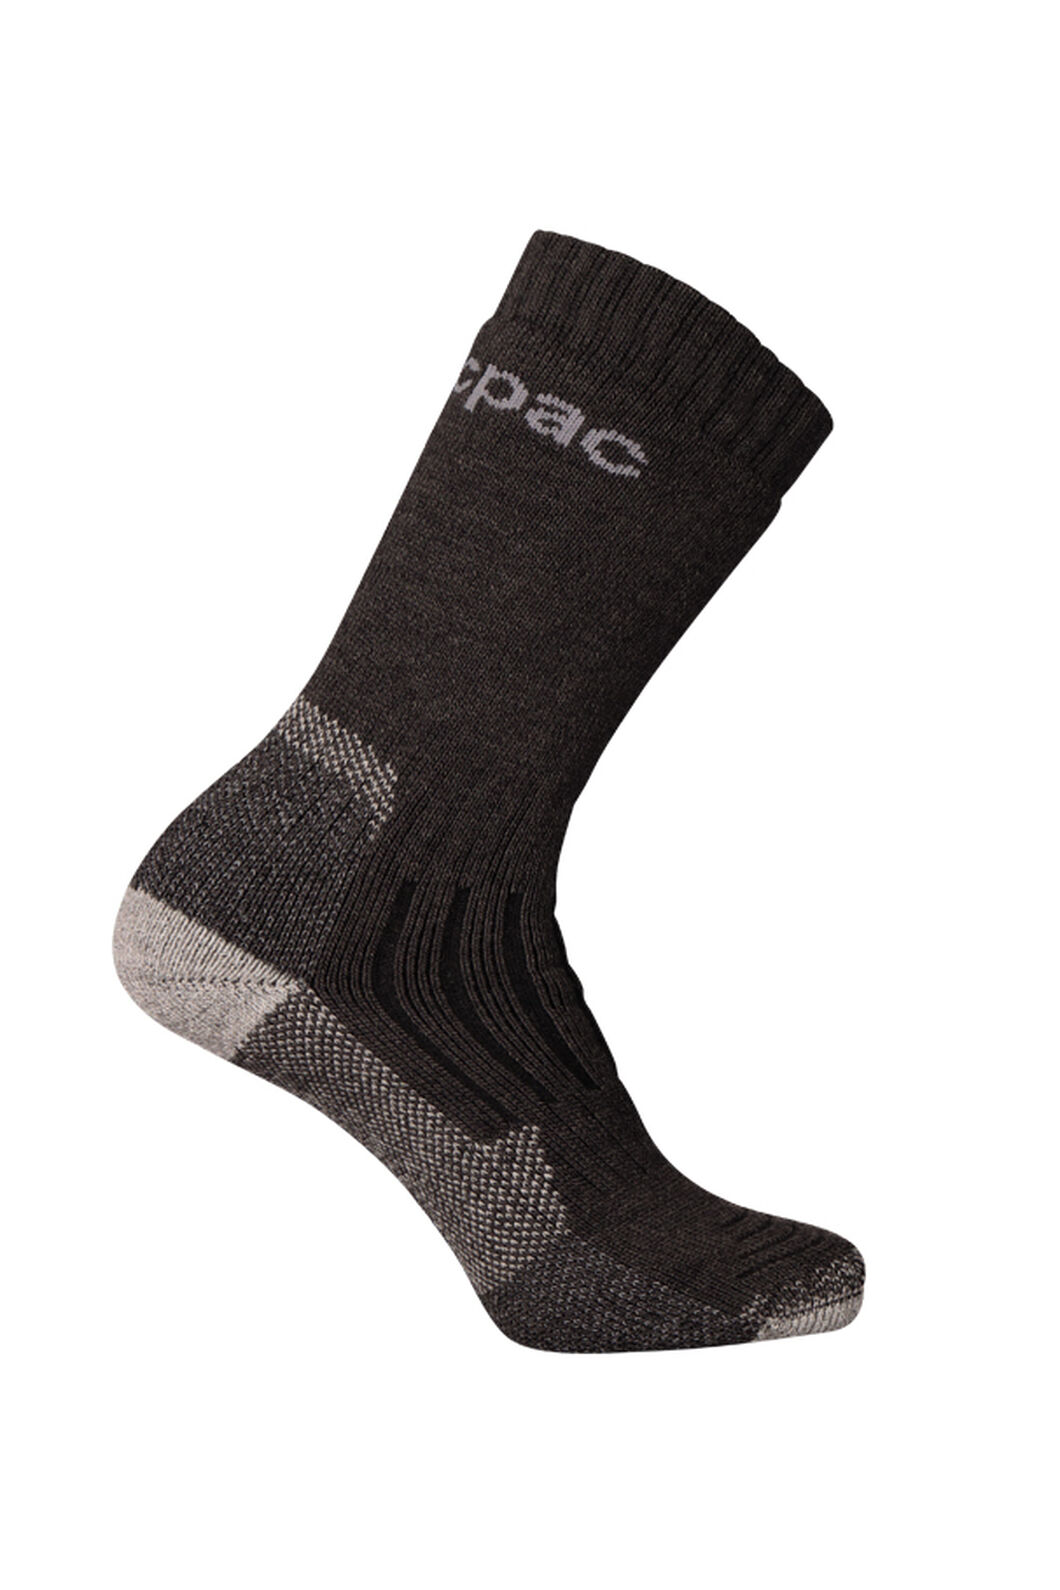 Macpac Expedition Alpine Sock, Charcoal, hi-res